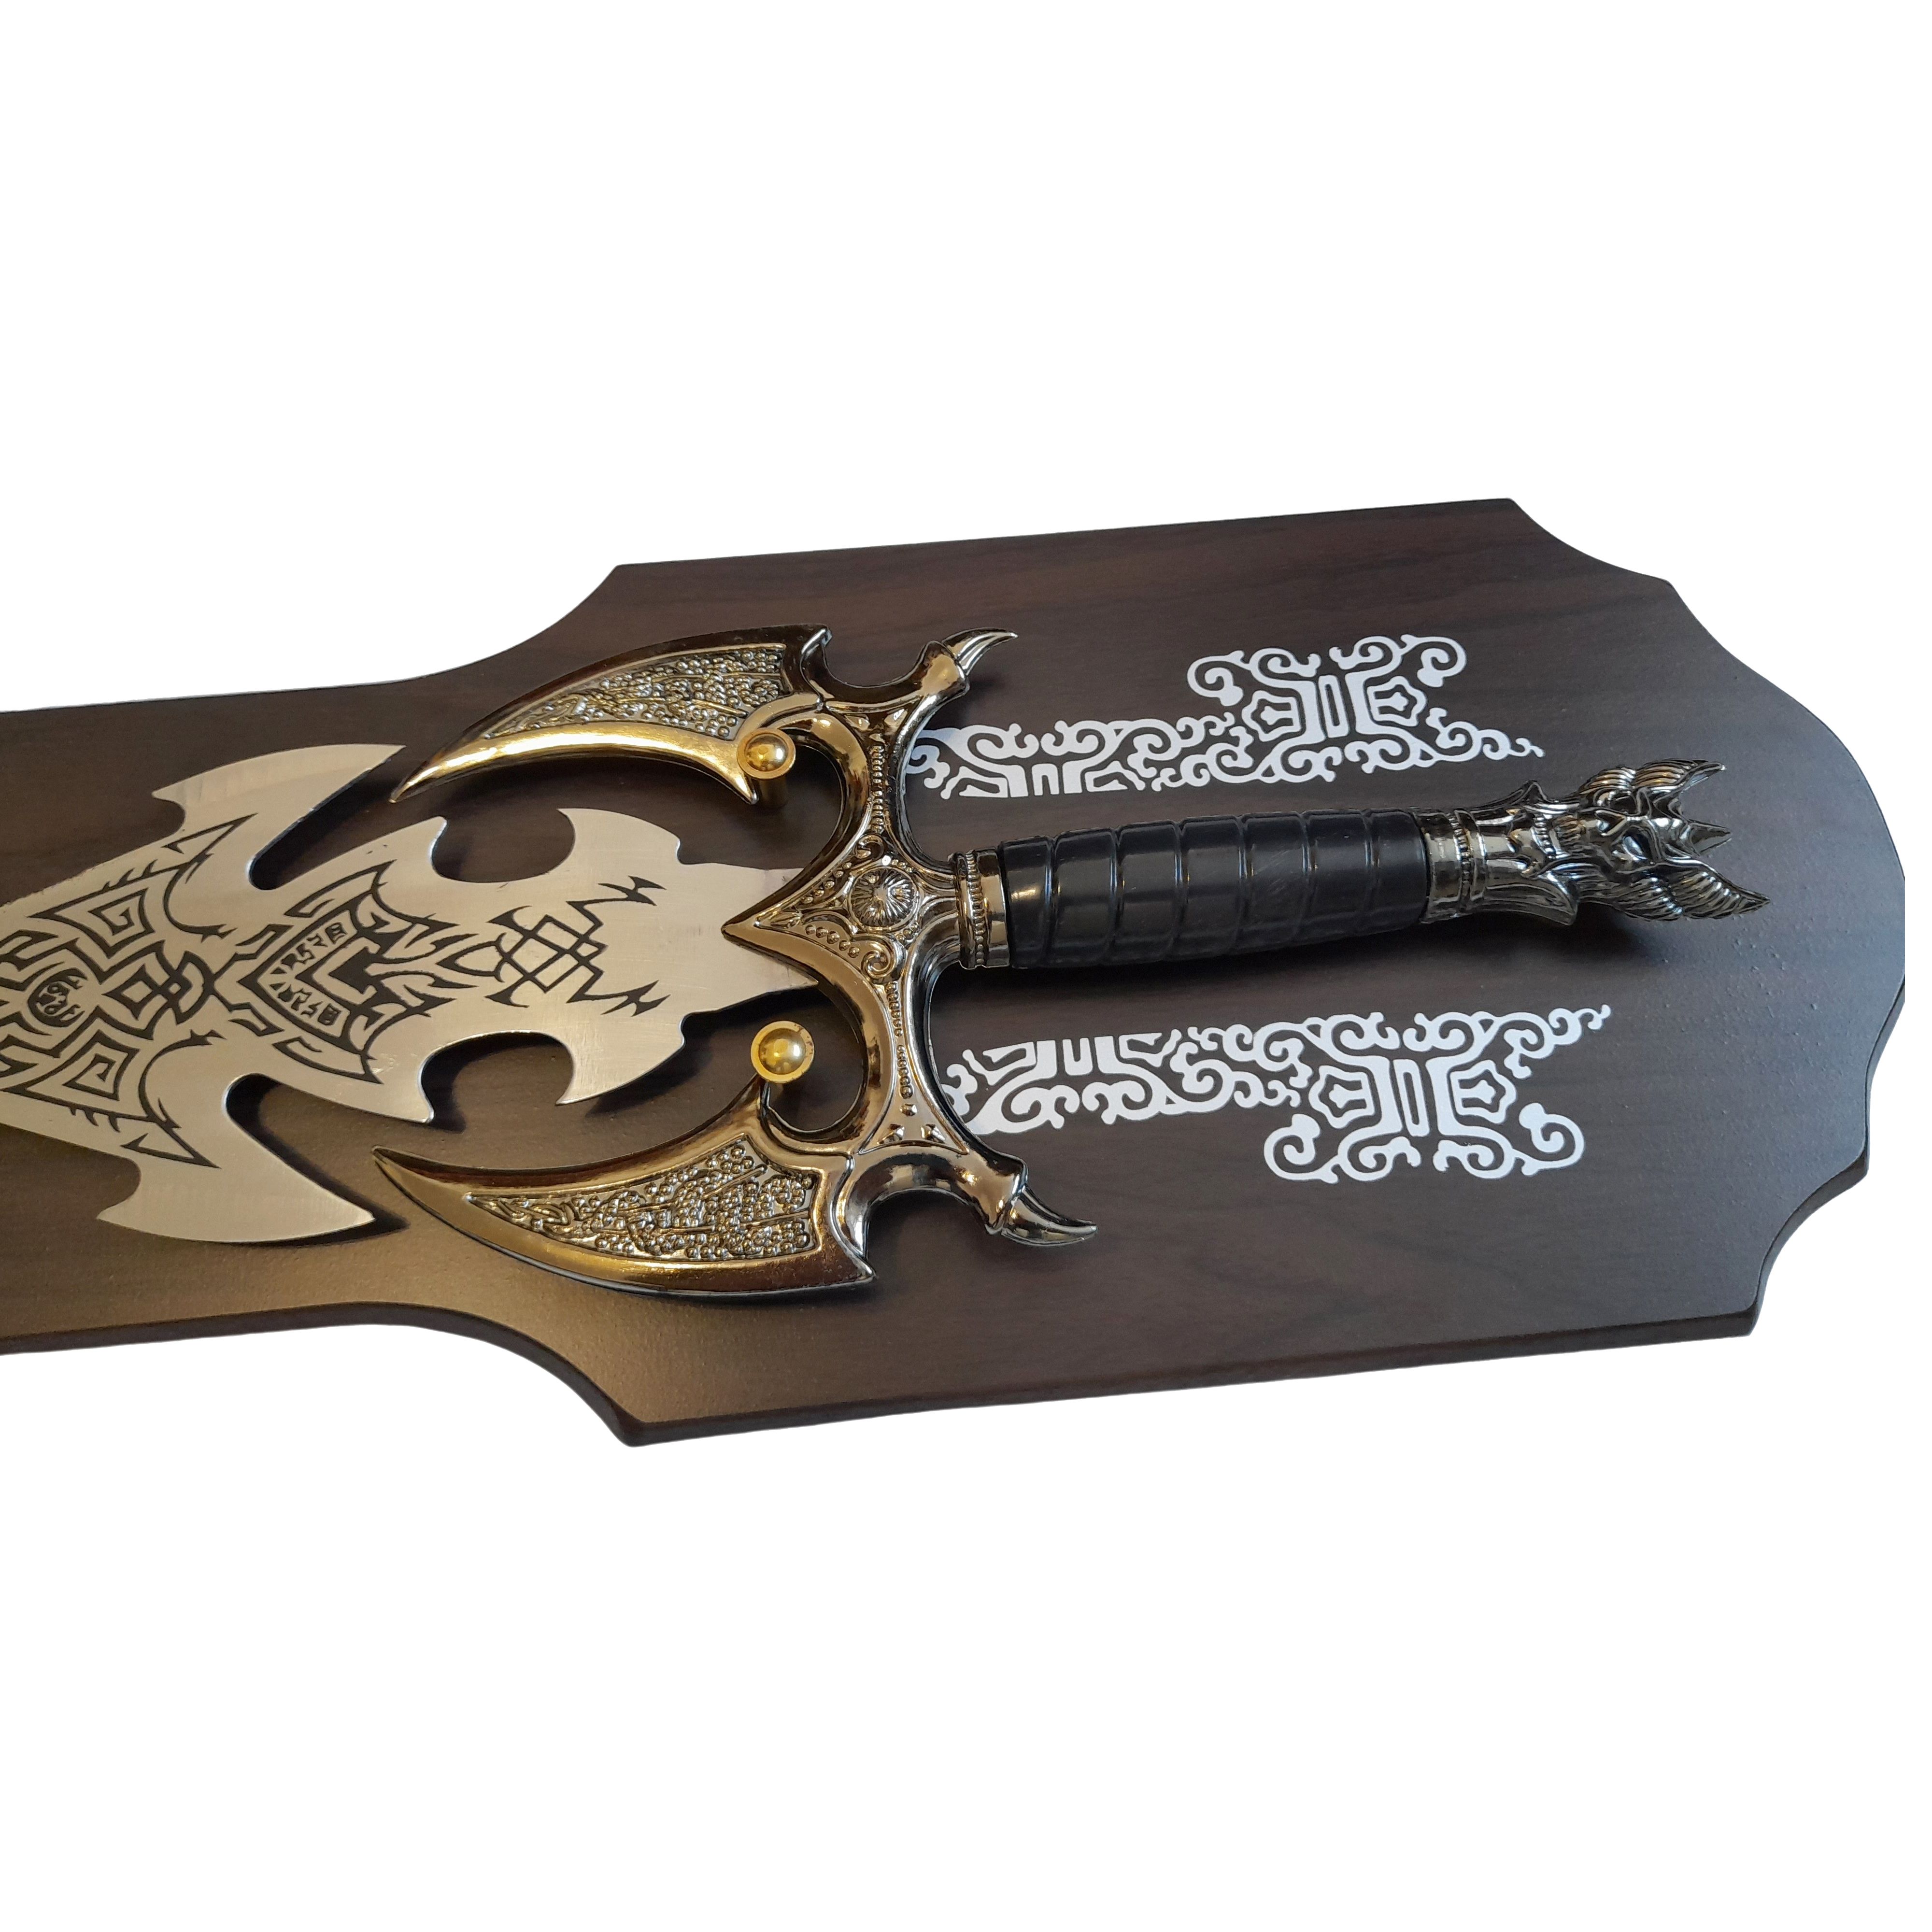 Sabie decorativa IdeallStore®, panoplie lemn, Dragon King, 99 cm, maro